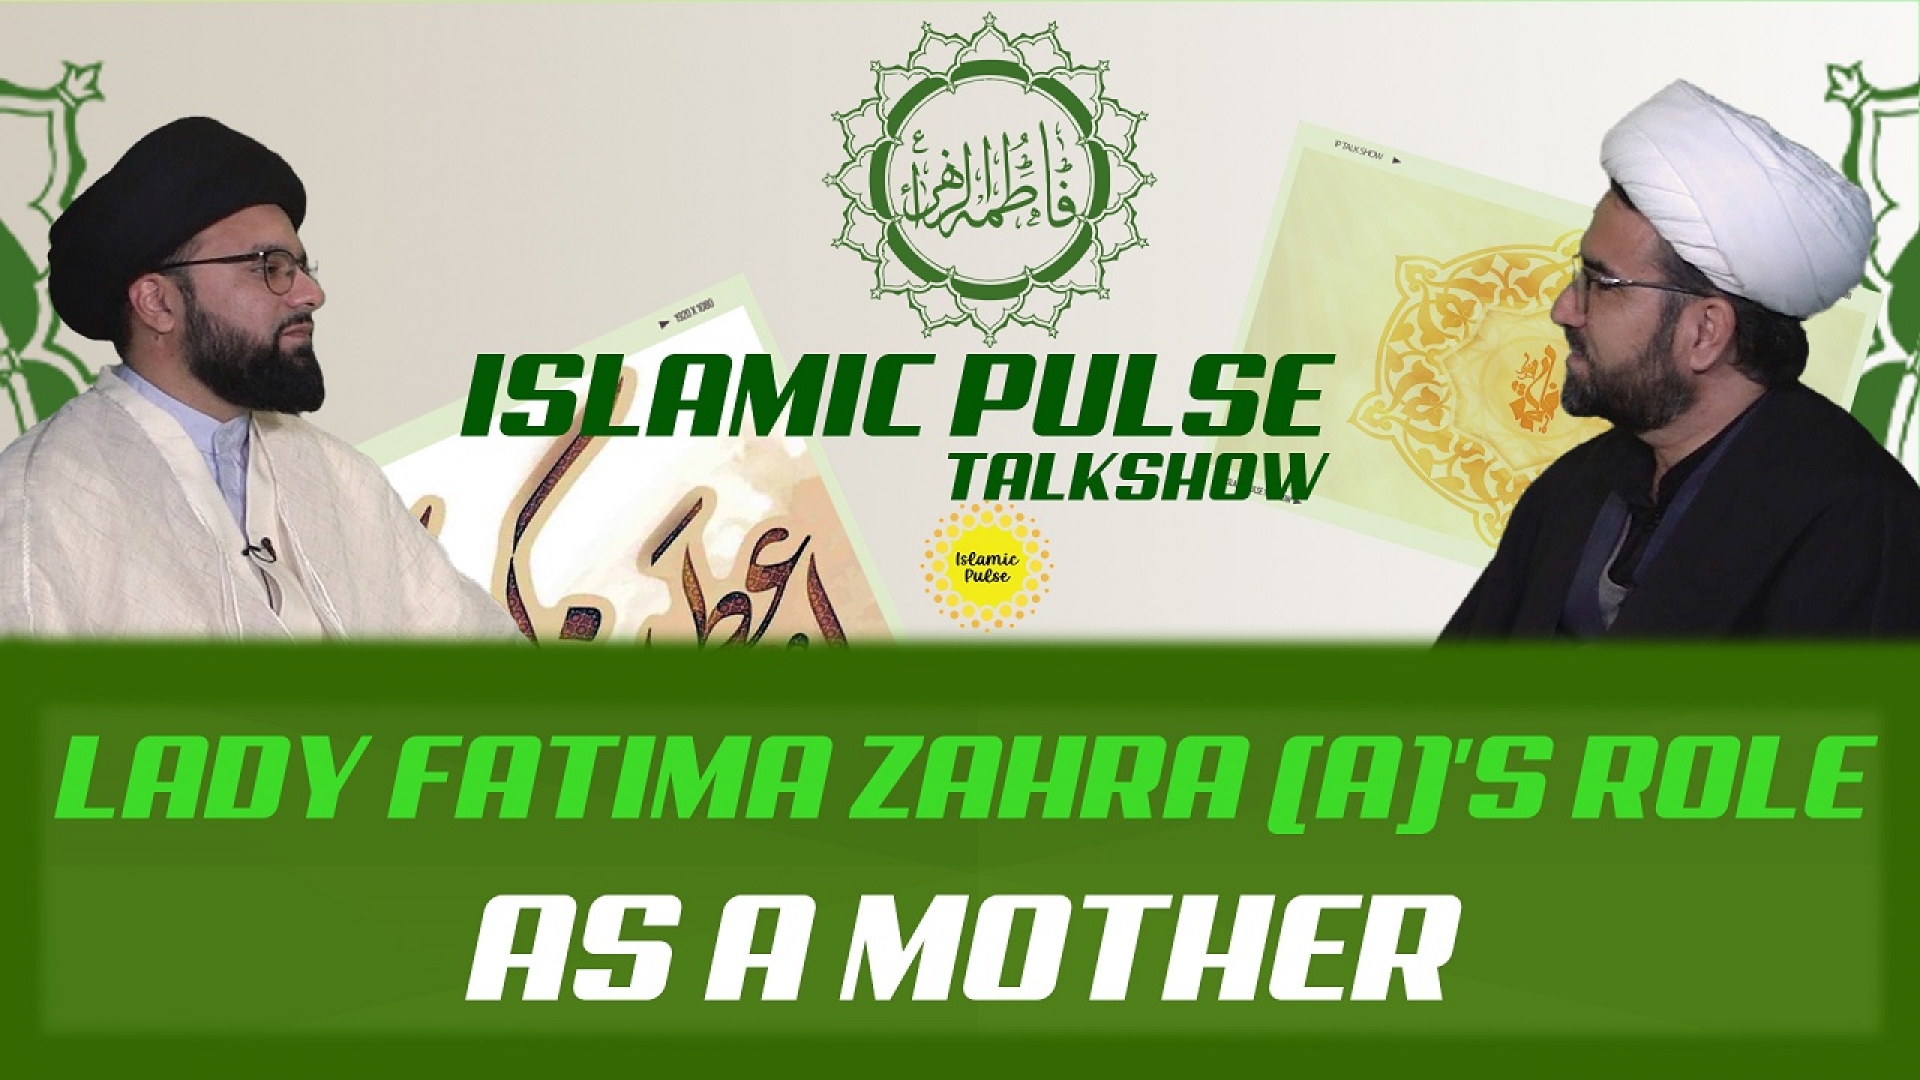 Lady Fatima Zahra (A)'s Role as a Mother | IP Talk Show | English